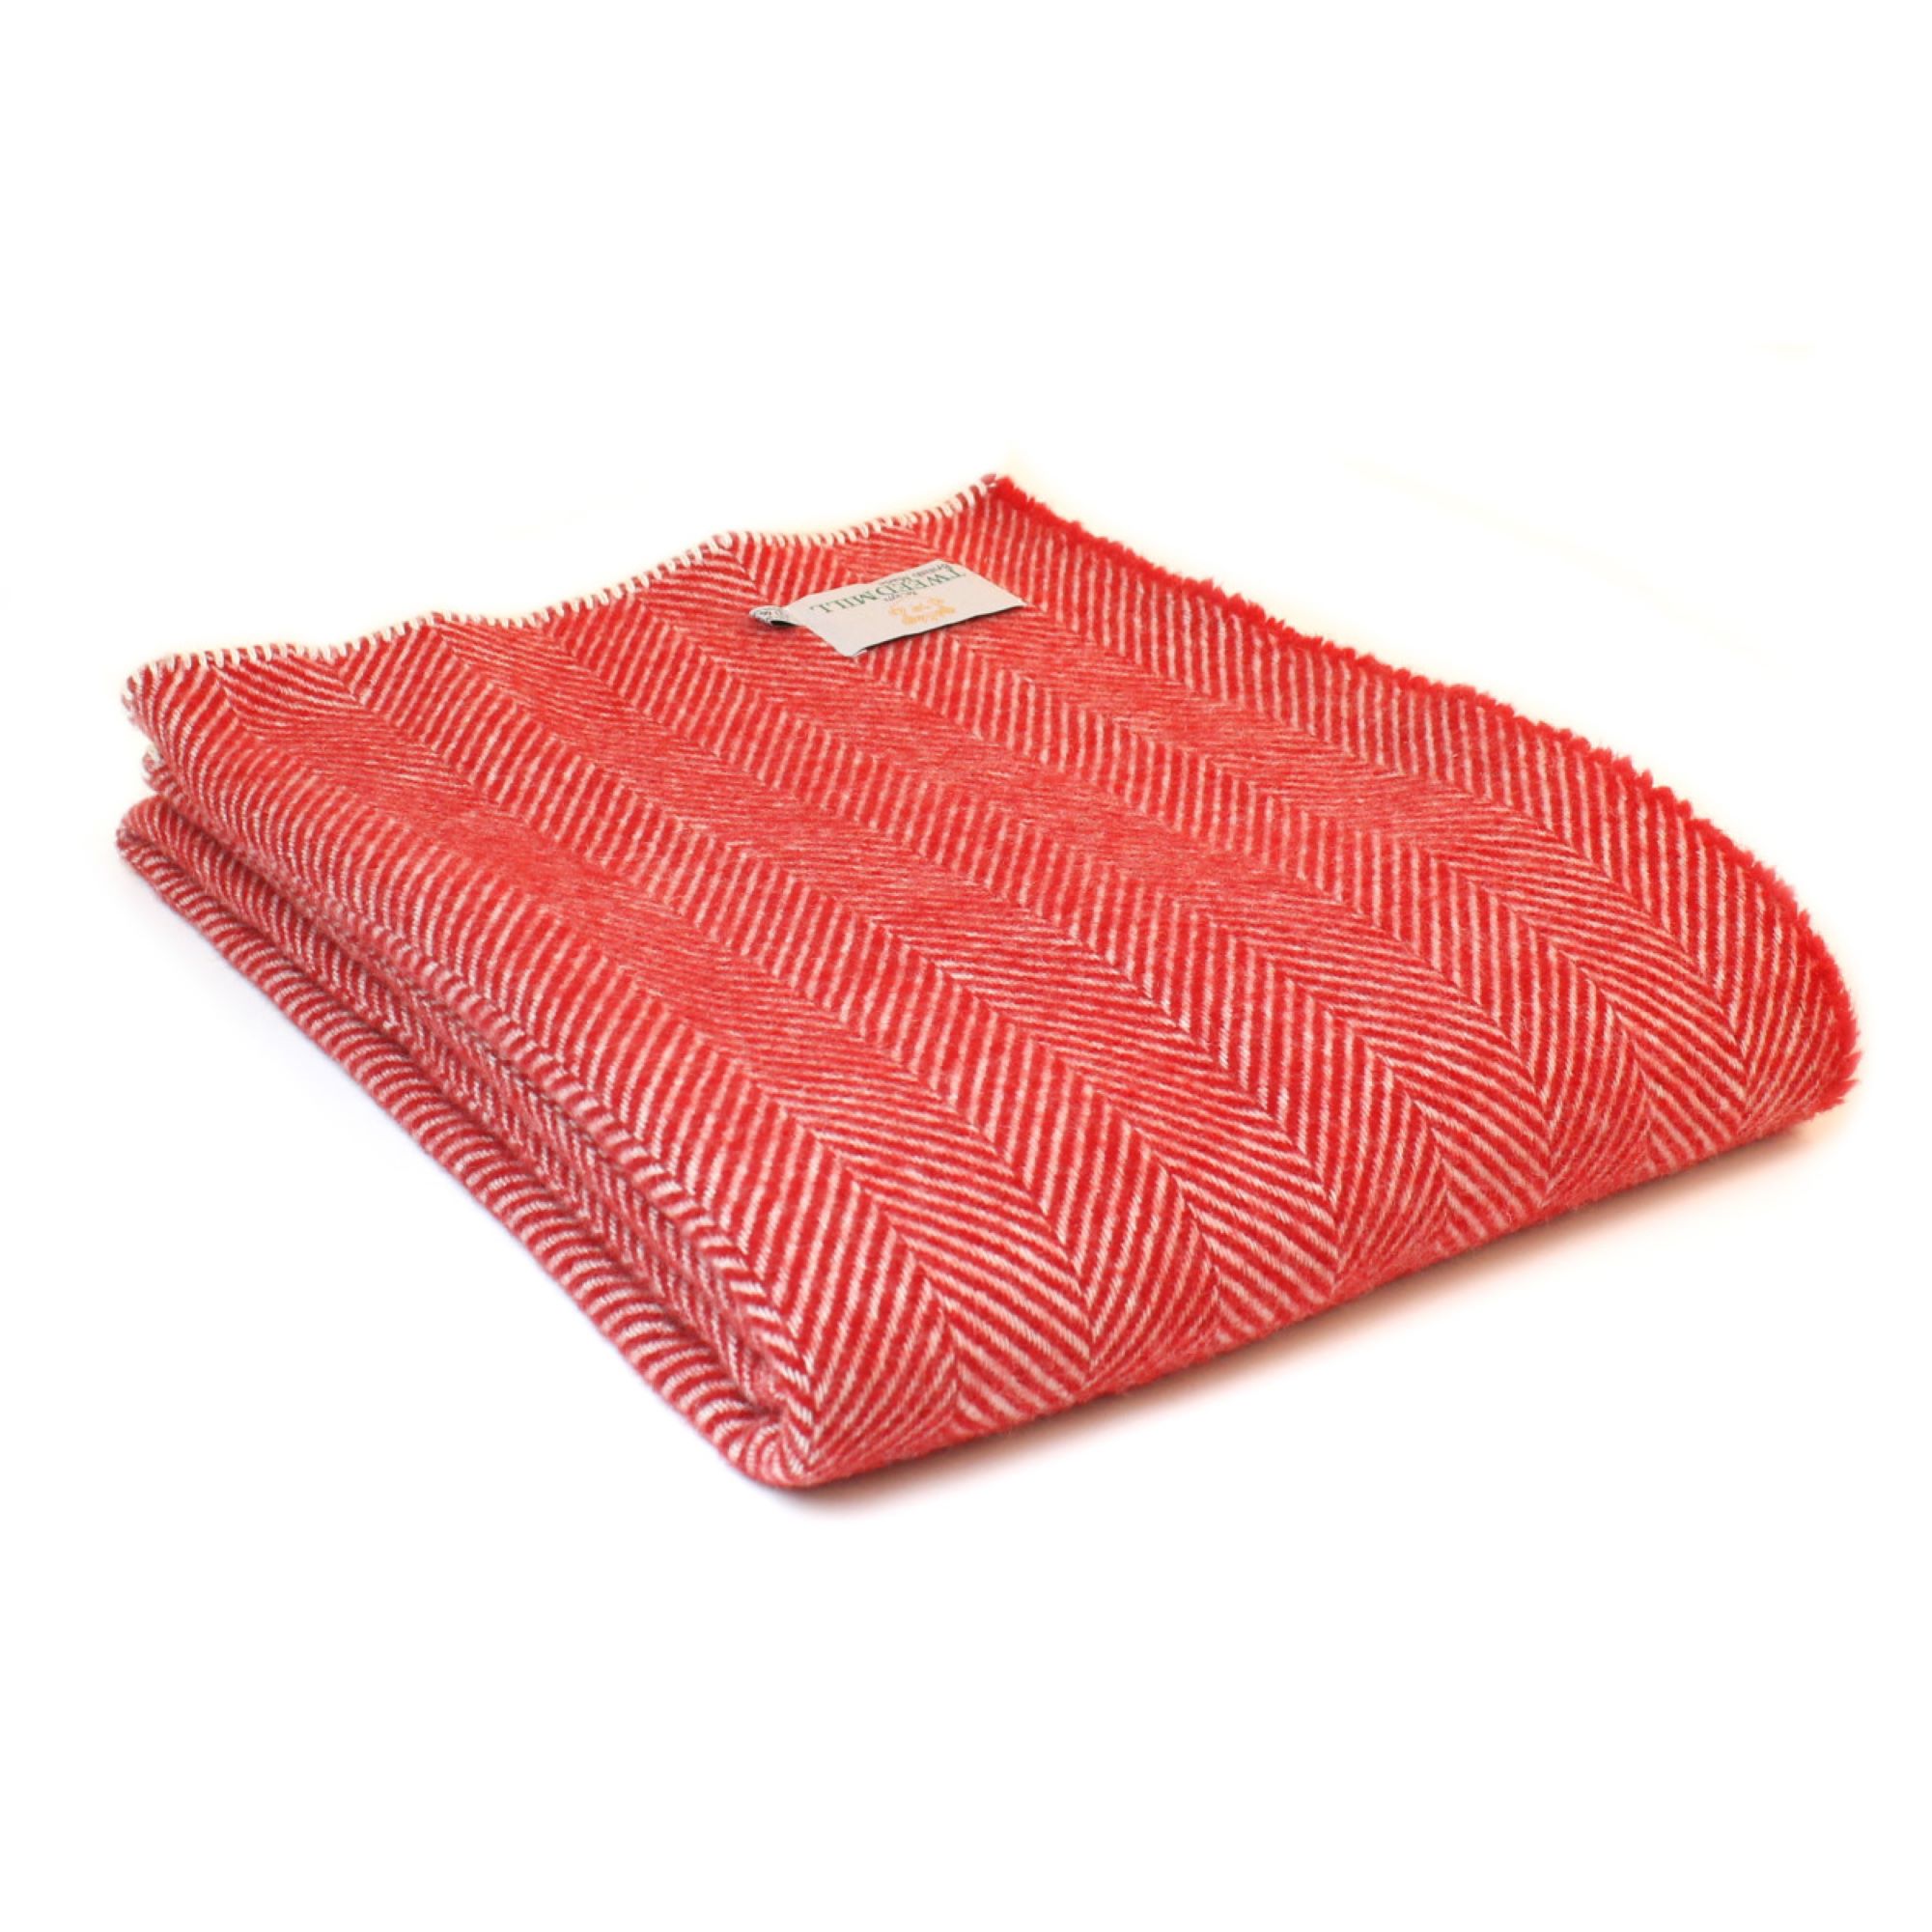 Tweedmill Red Fishbone Pure New Wool Throw with Cream Blanket Stitch Edge